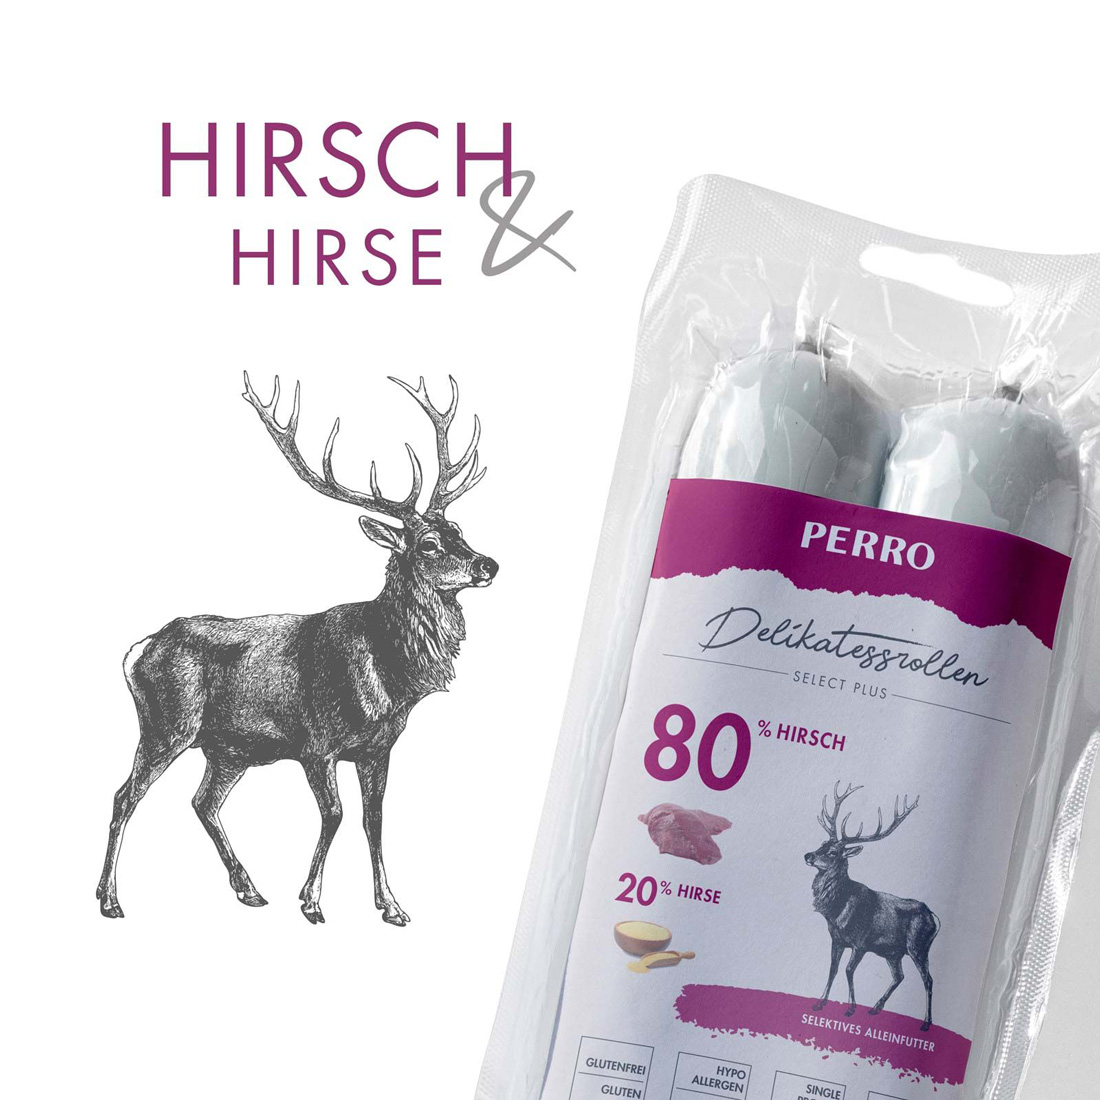 PERRO Delikatessrolle No.2 Hirsch & Hirse